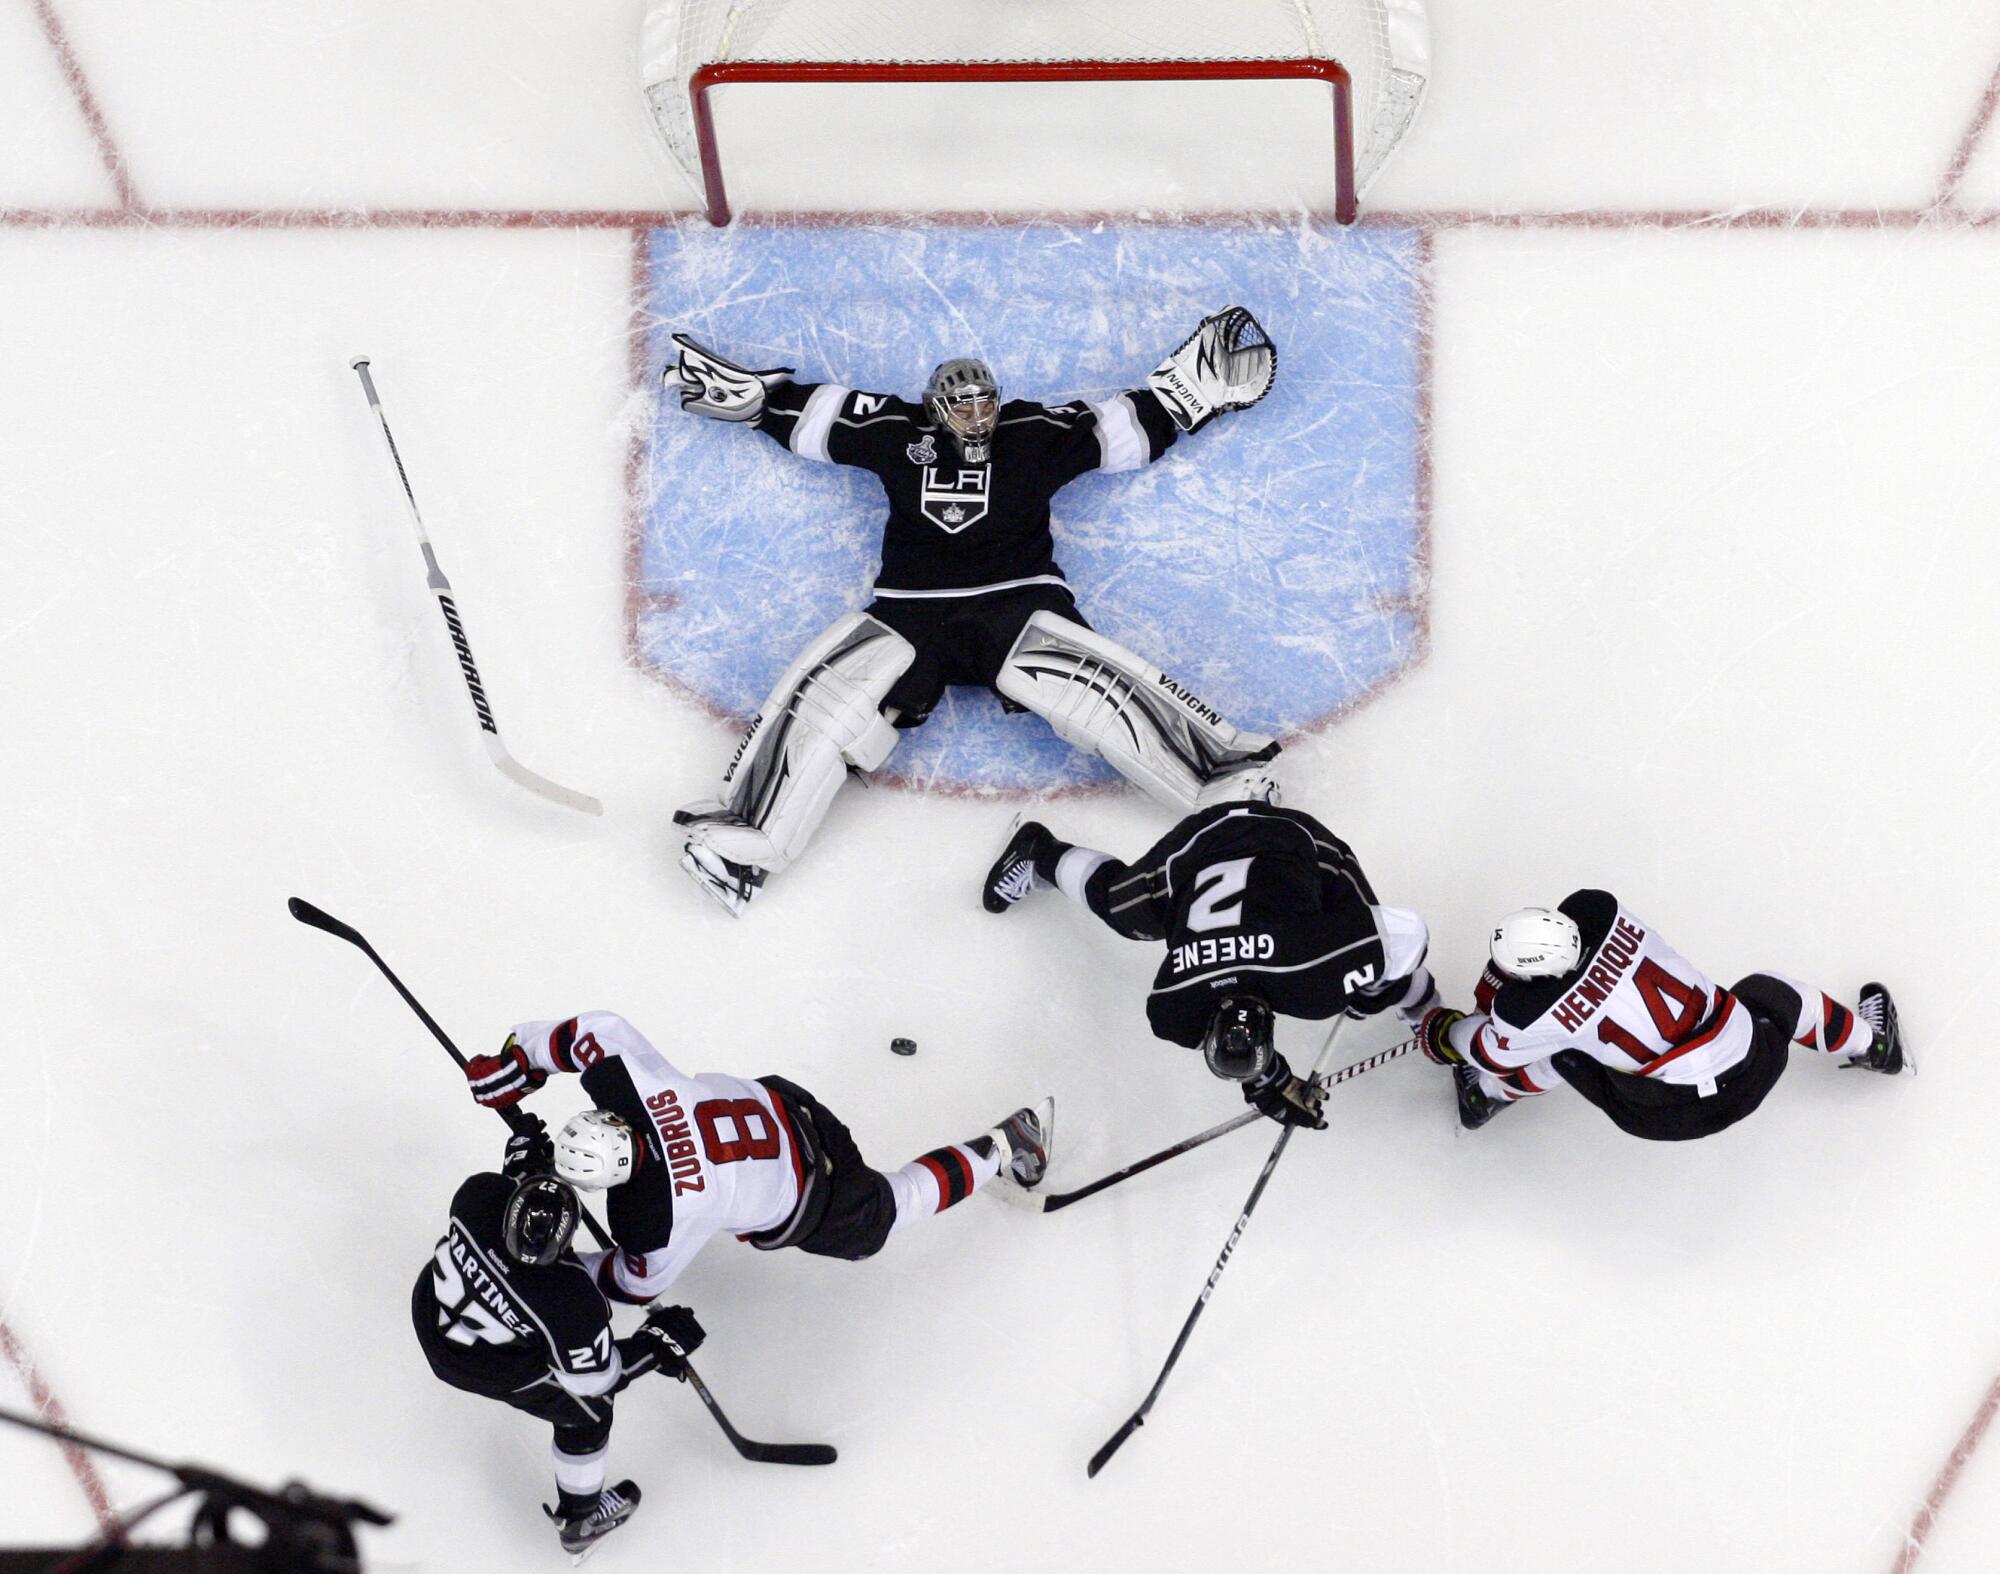 2014 Stanley Cup finals -- Los Angeles Kings get comfortable in